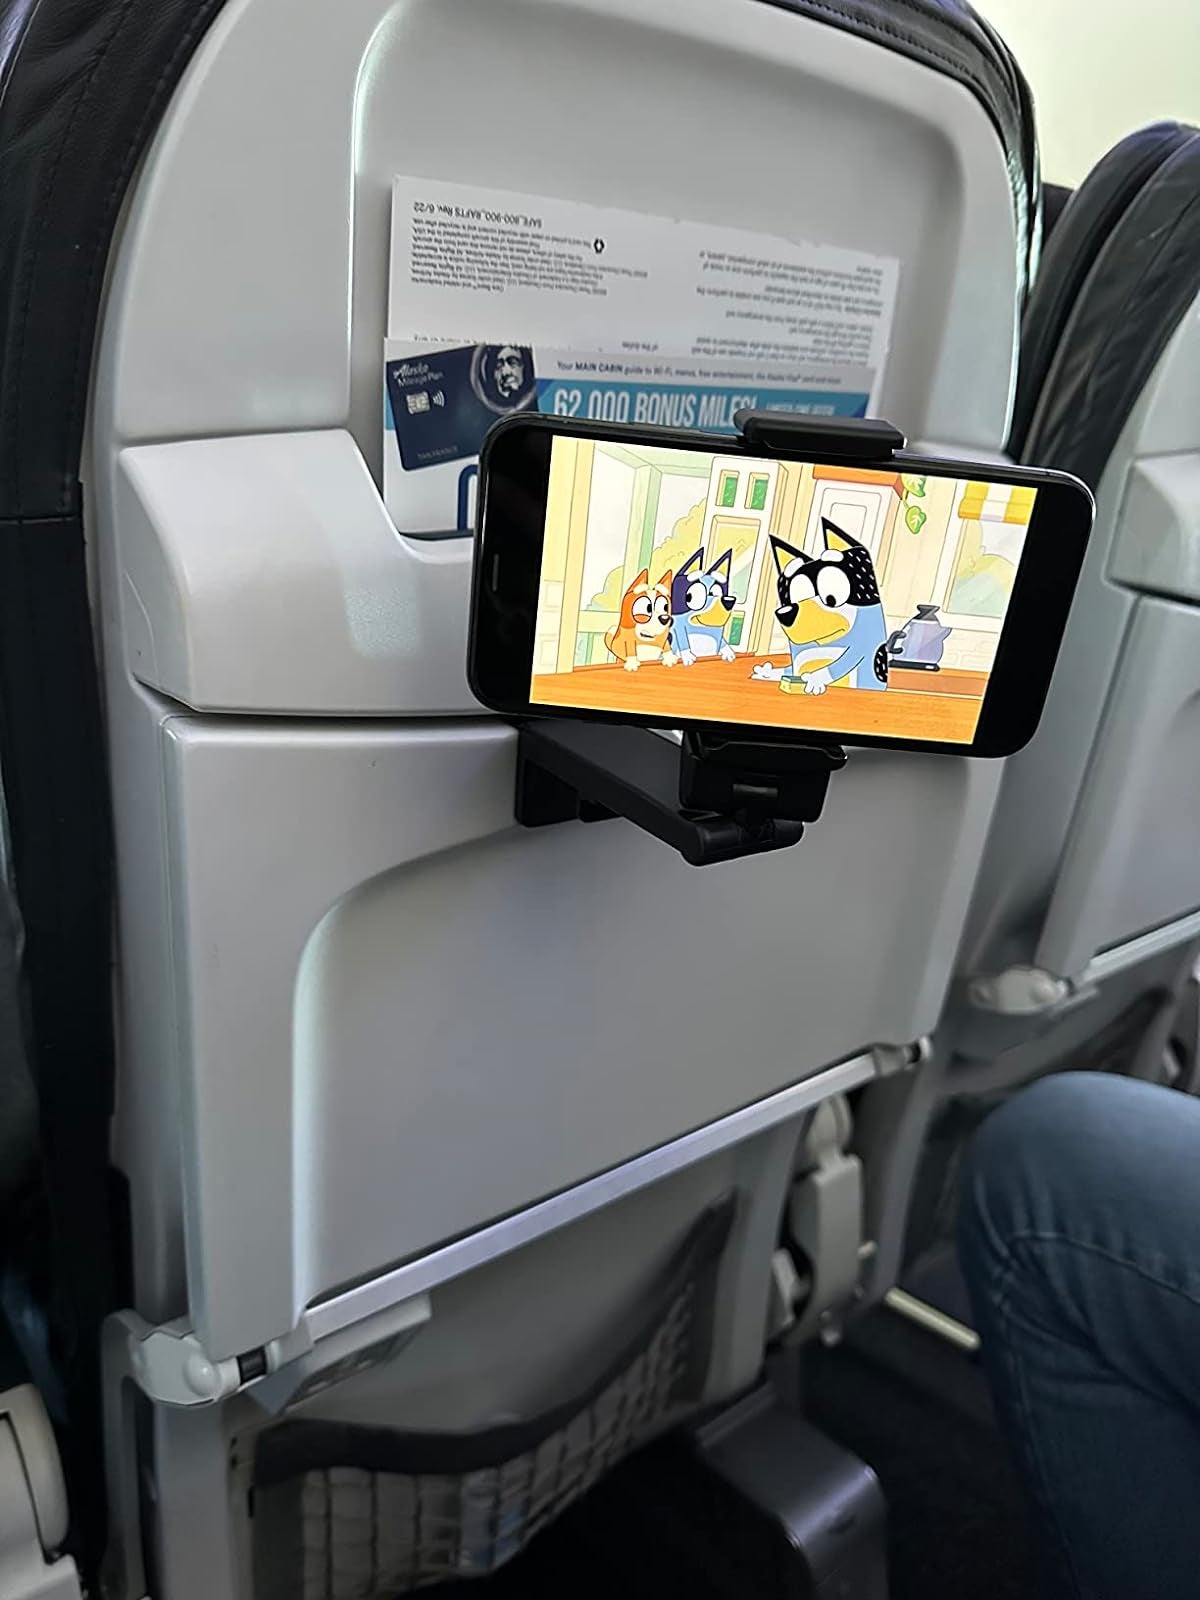 a phone mounted on a seatback tray